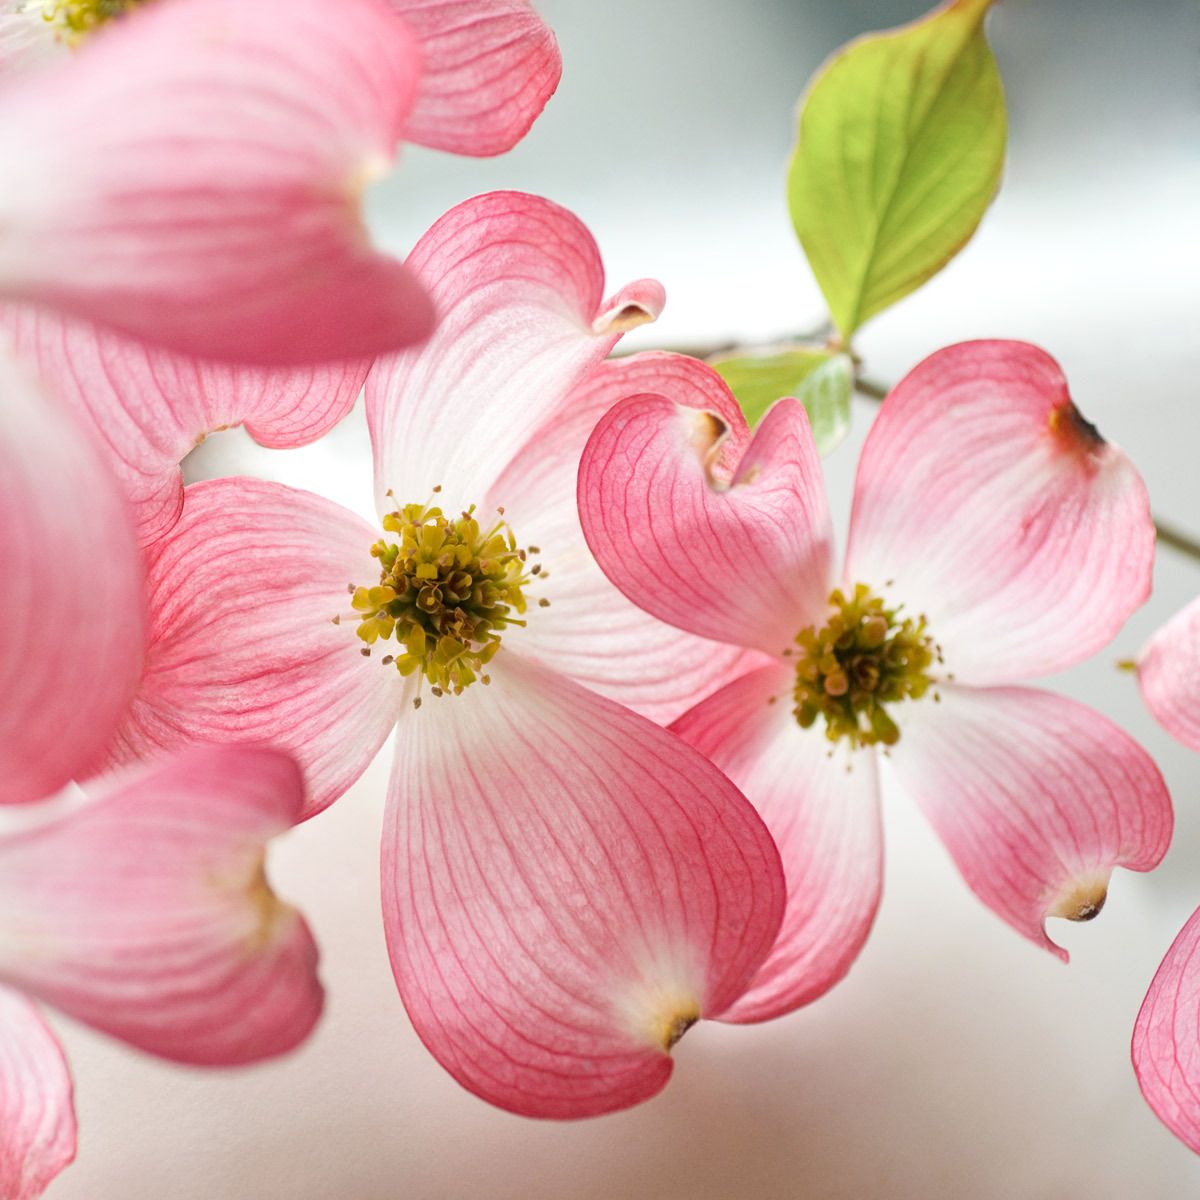 Pink Dogwood flowers